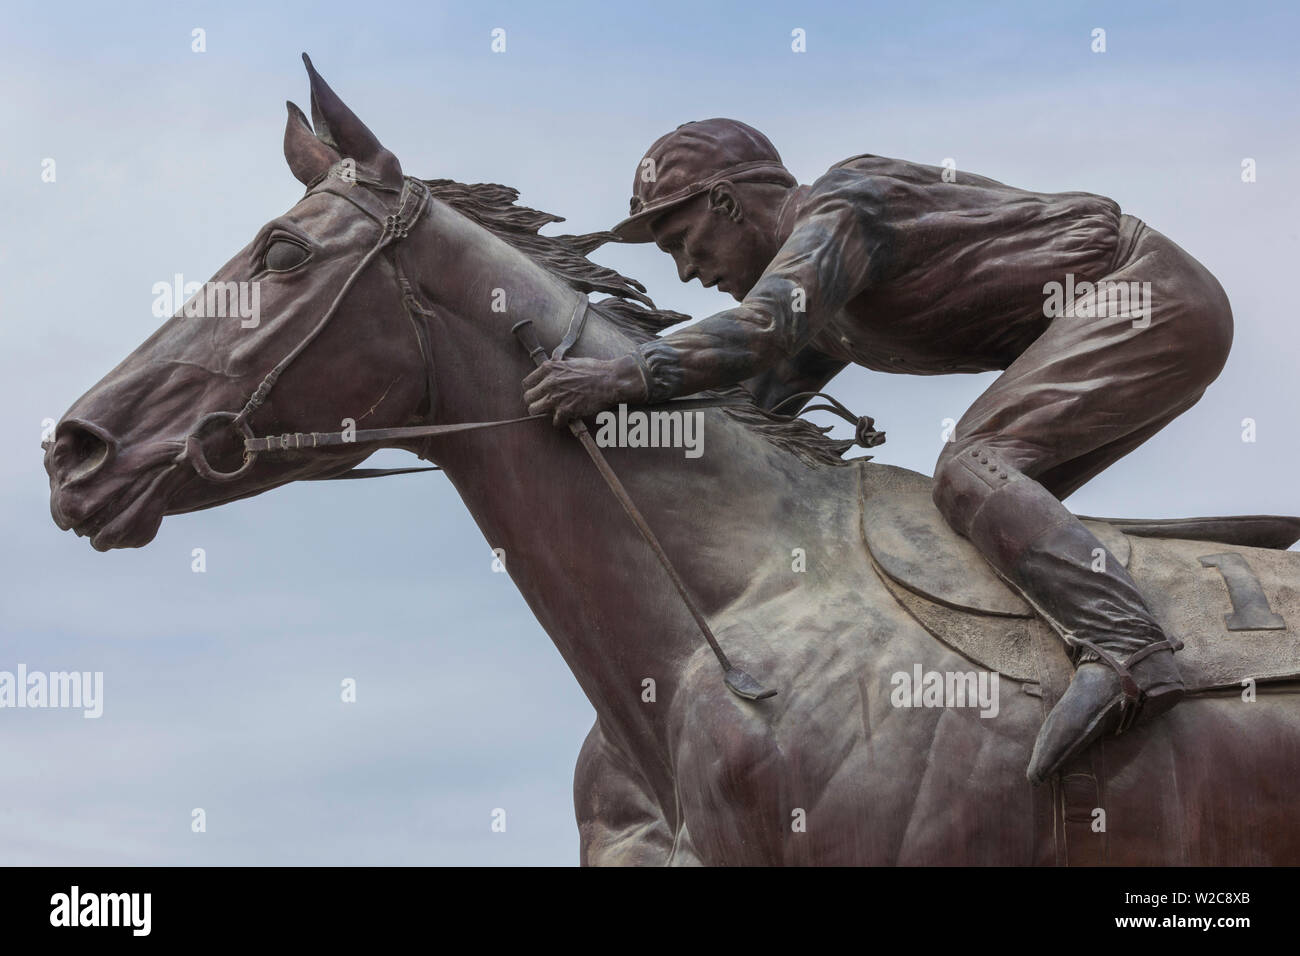 New Zealand, South Island, Canterbury, Timaru, statue of Phar Lap, champion racing horse Stock Photo